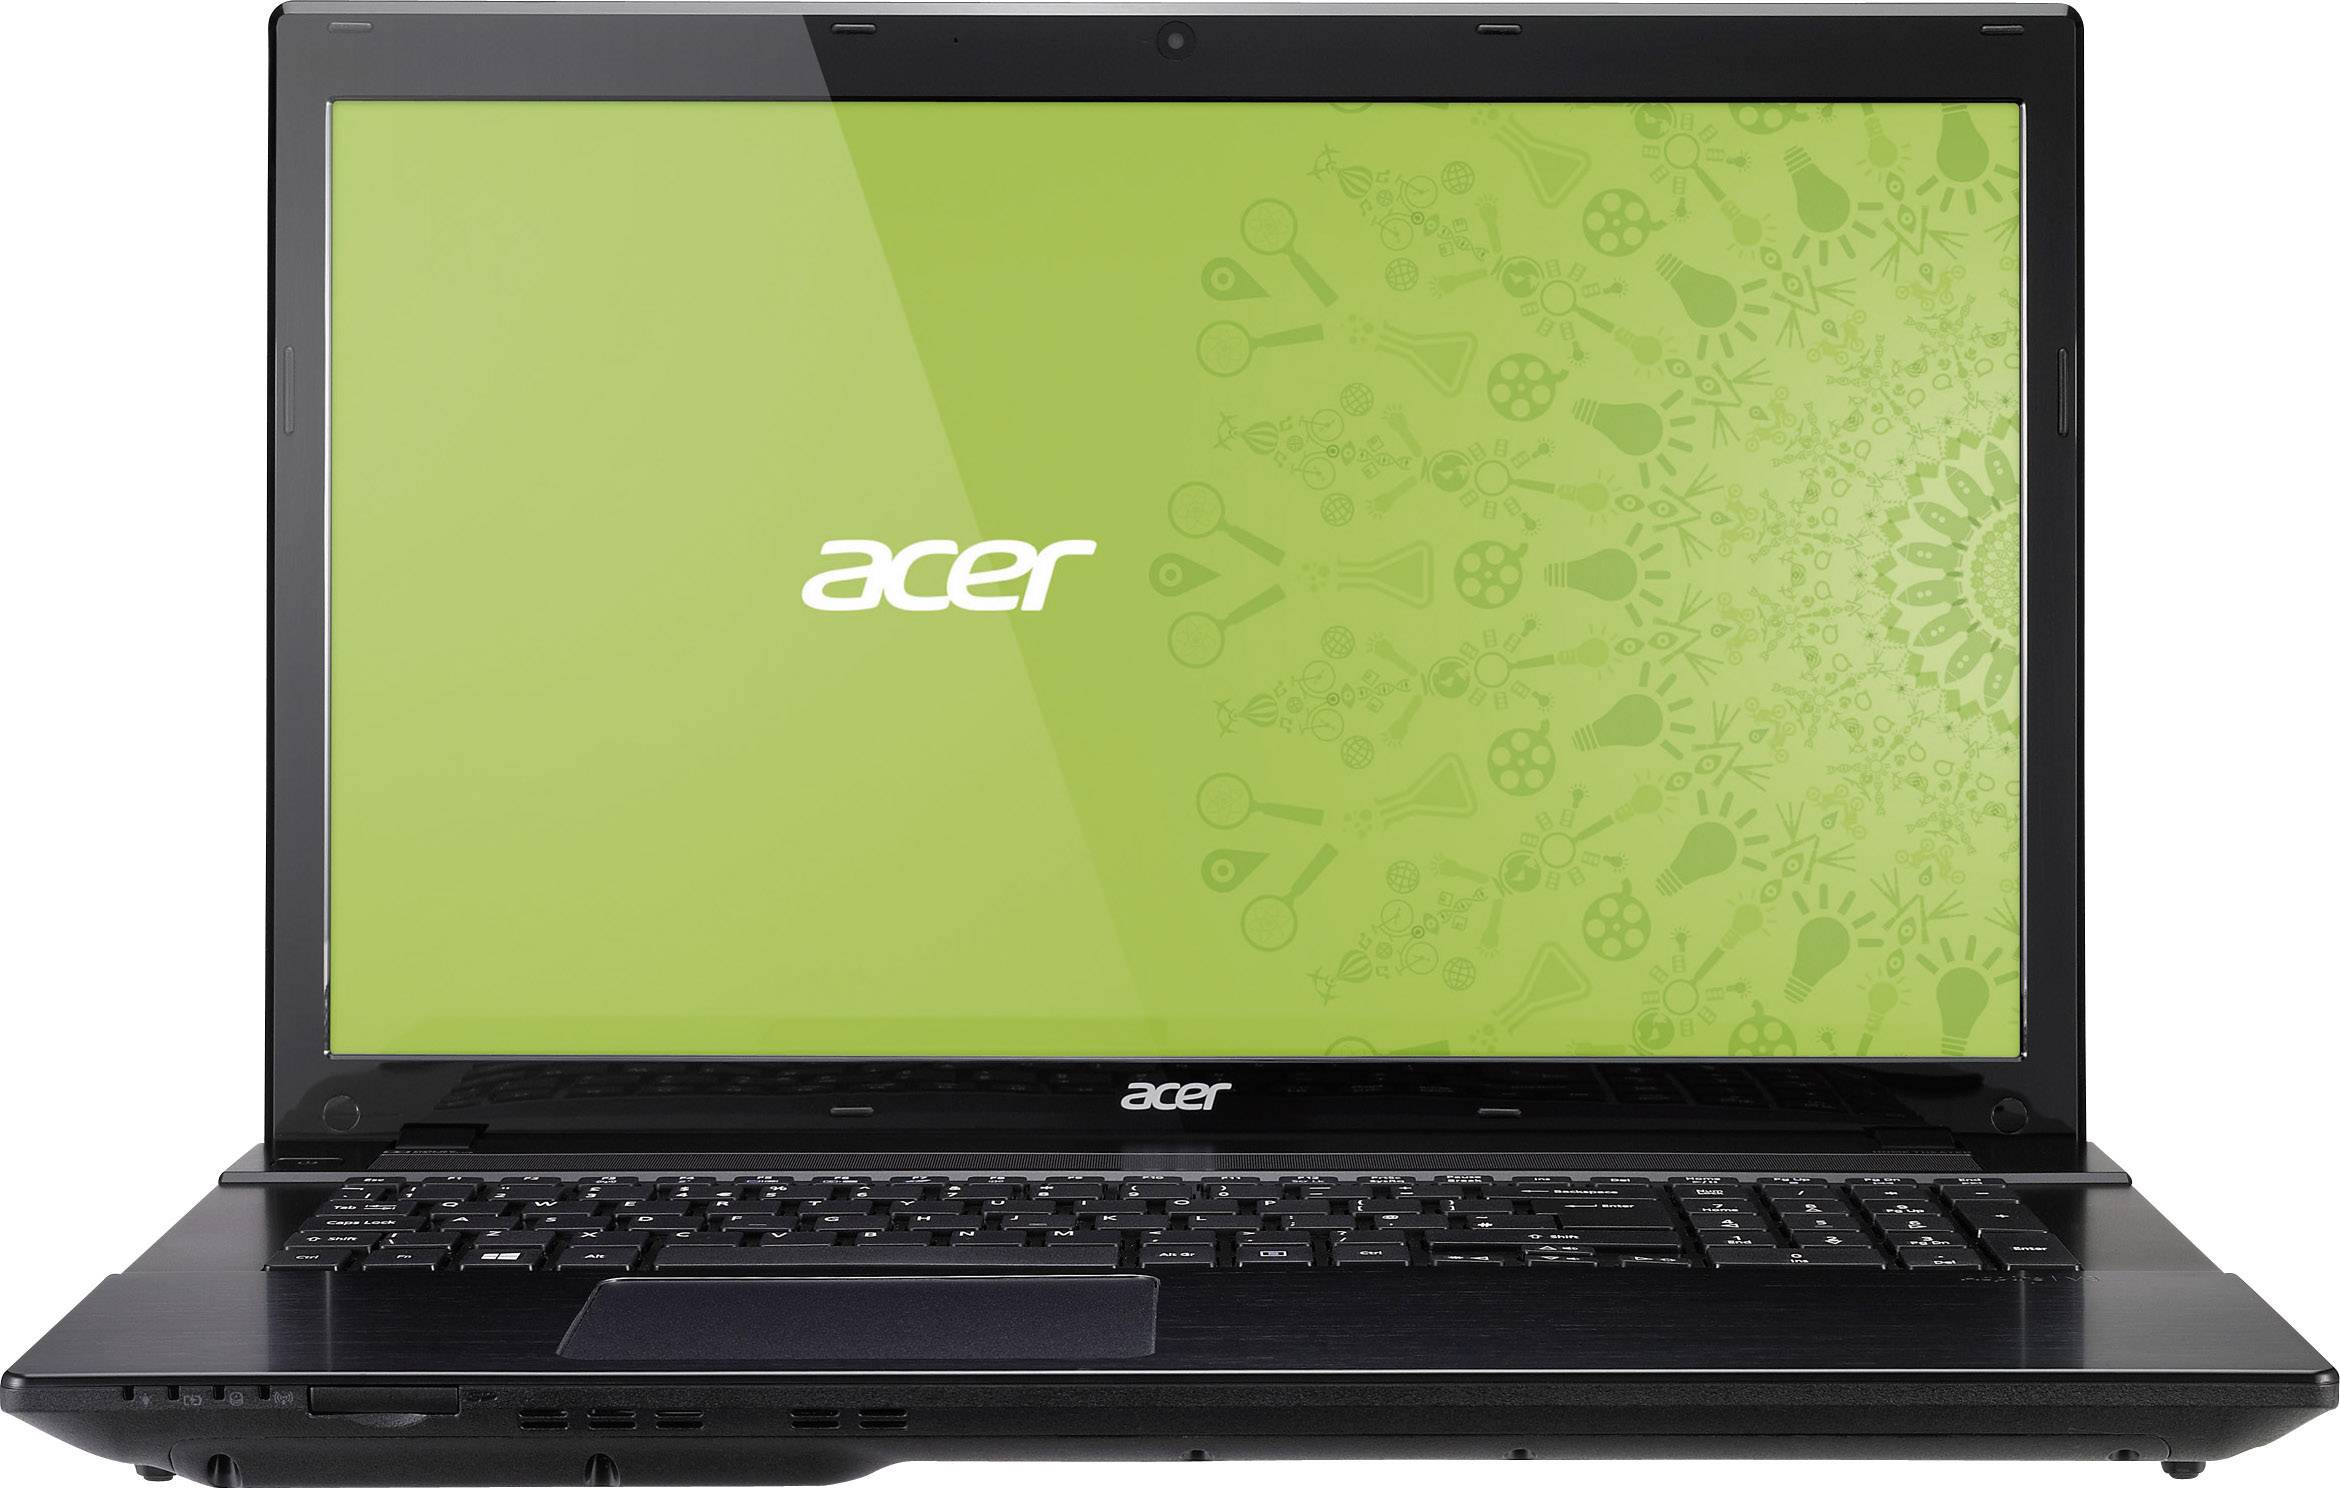 Acer Aspire v3 772g. Acer Aspire v5 131.